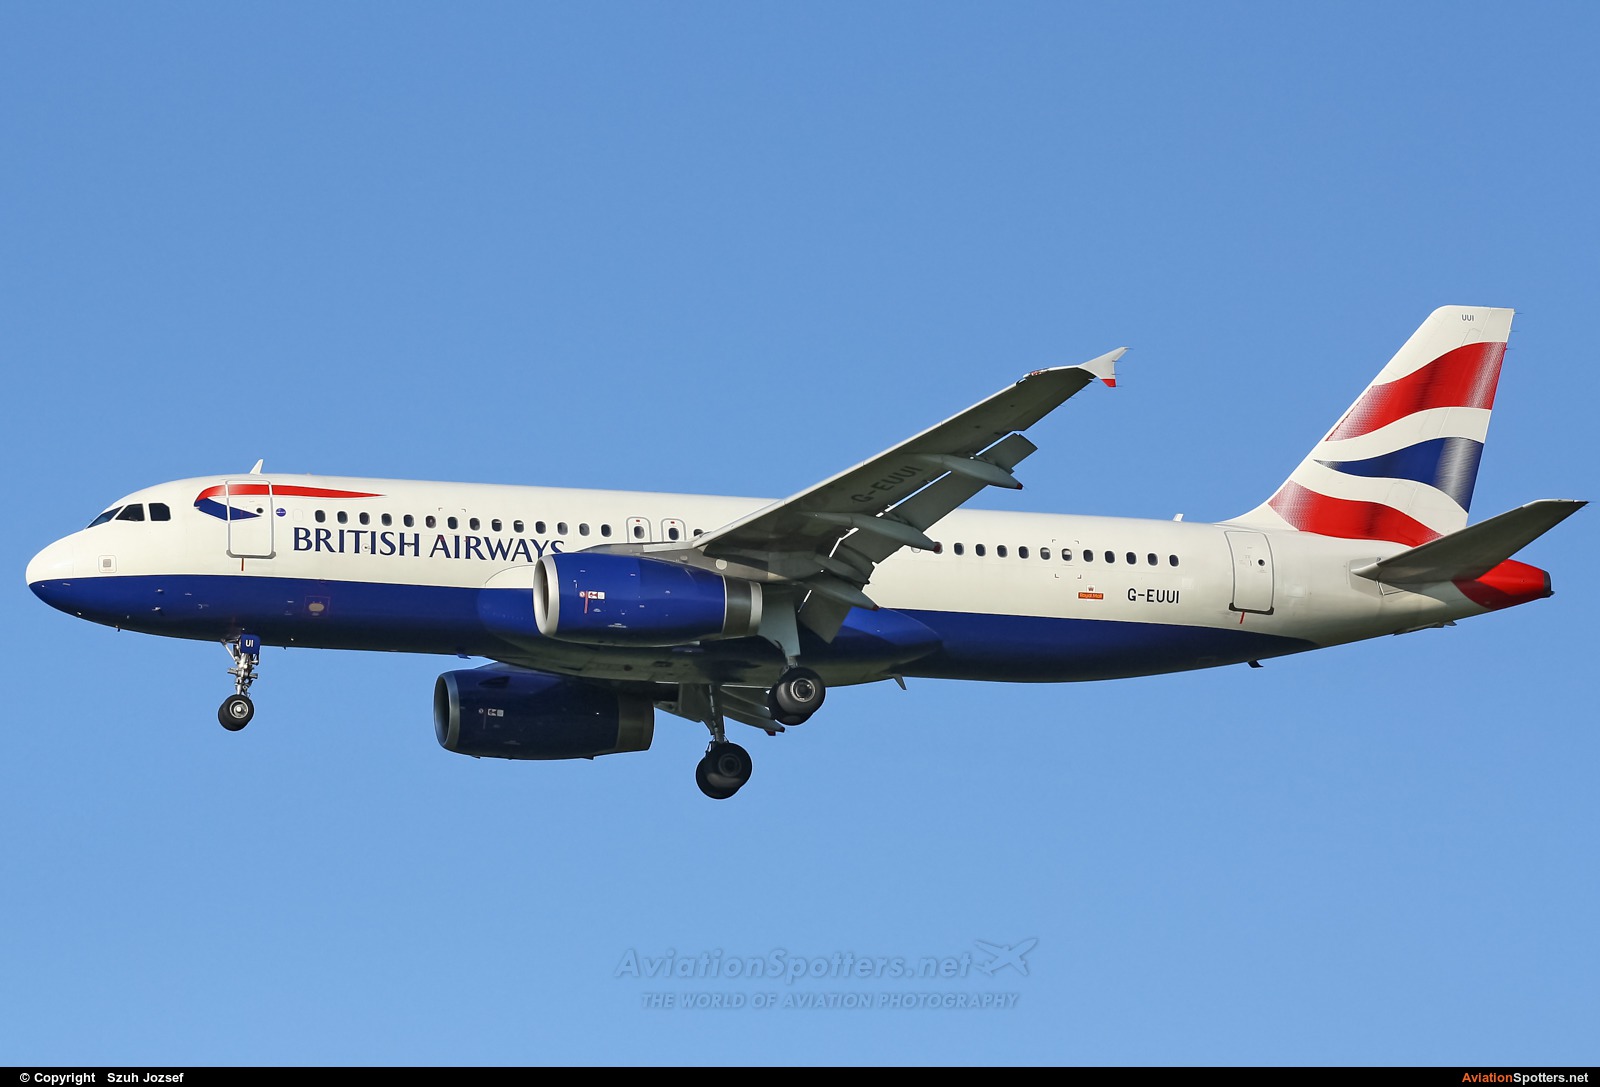 British Airways  -  A320  (G-EUUI) By Szuh Jozsef (szuh jozsef)